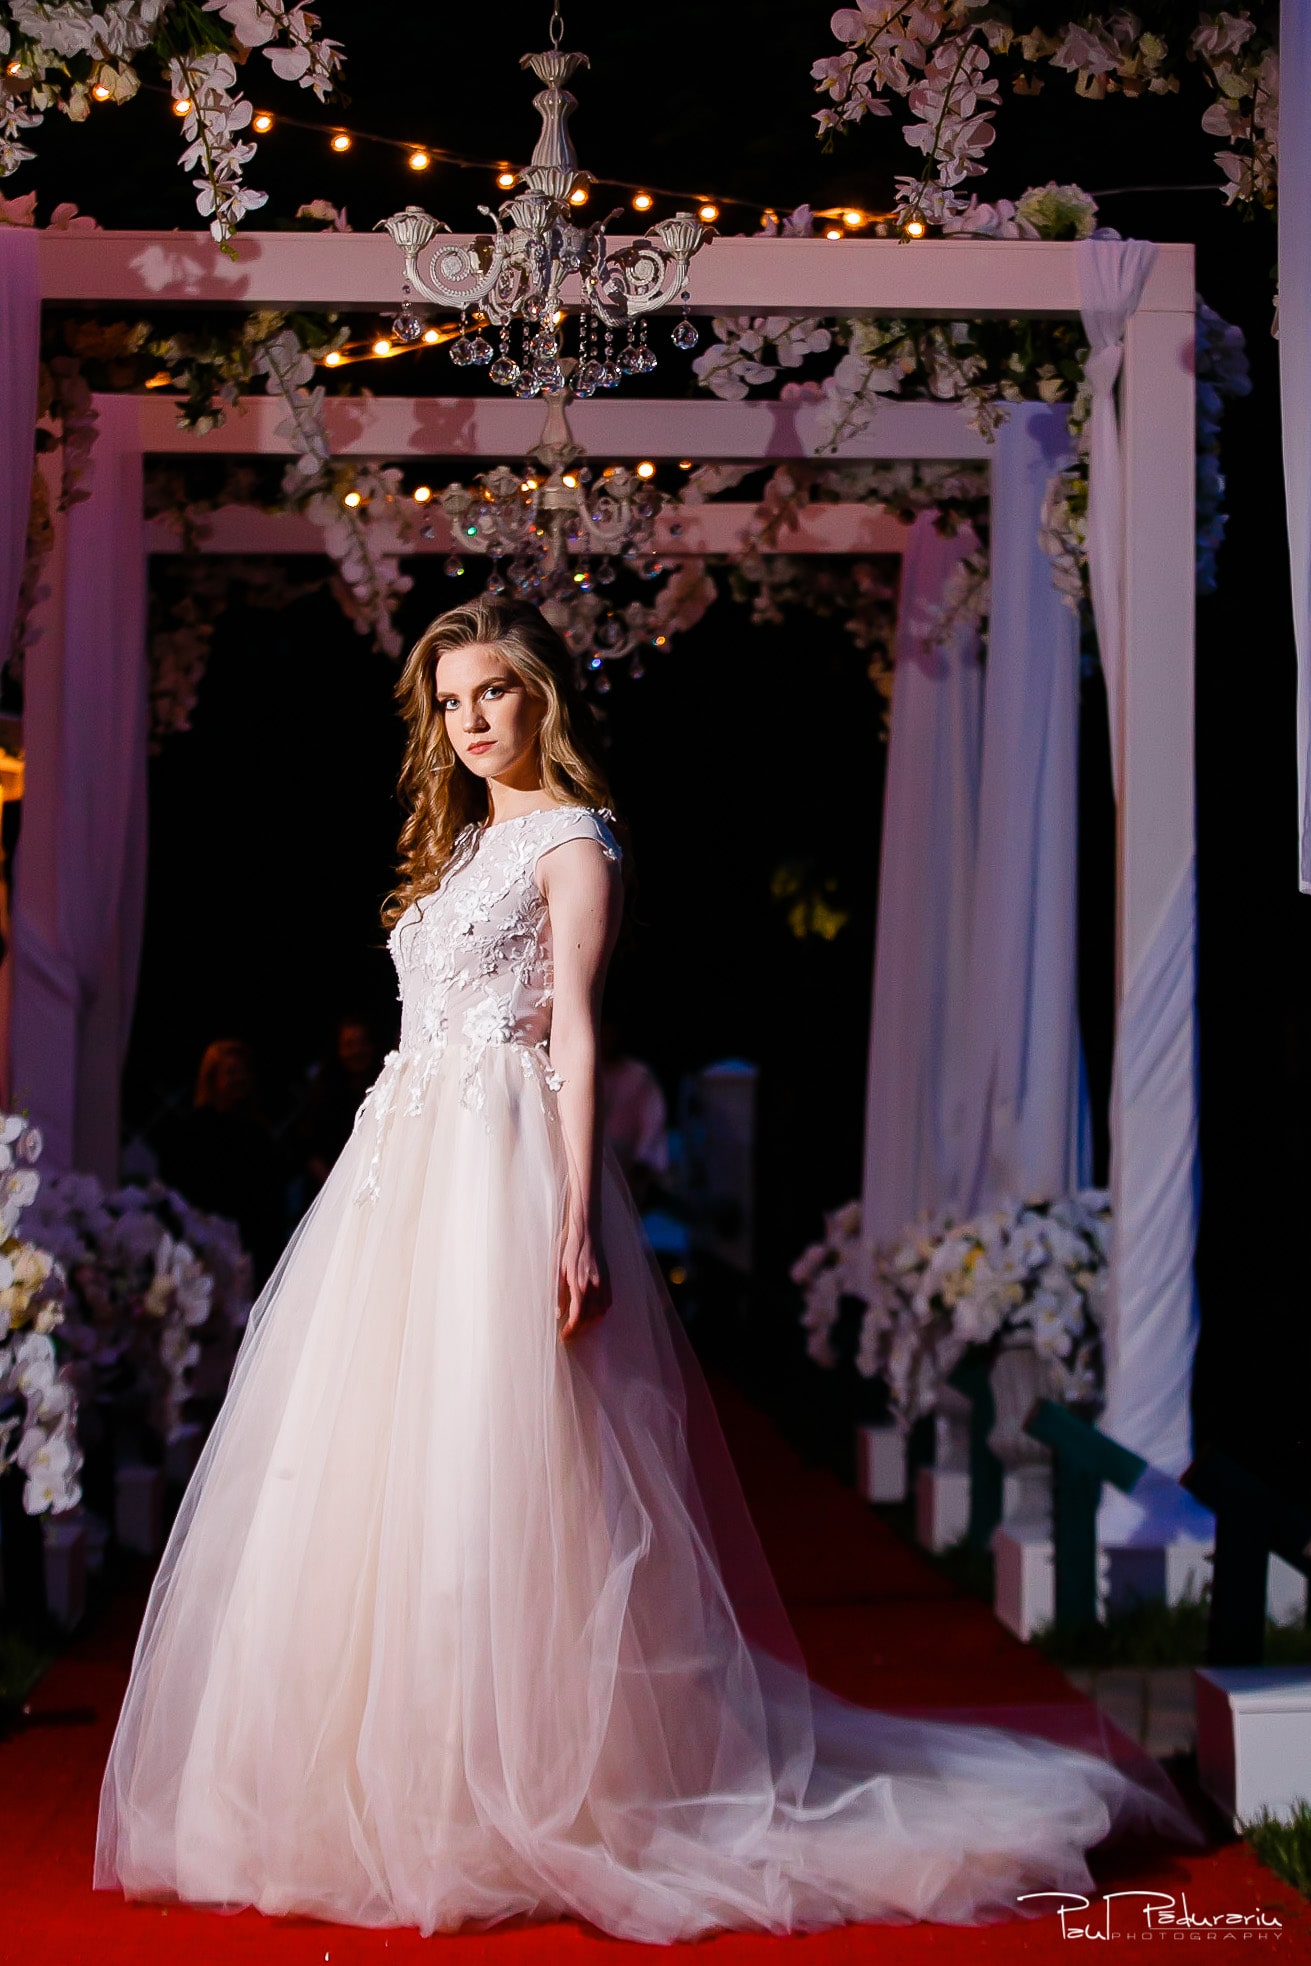 Modern Bride Edith Val colectie rochie mireasa 2019 - fotograf profesionist iasi paul padurariu | nunta iasi 22